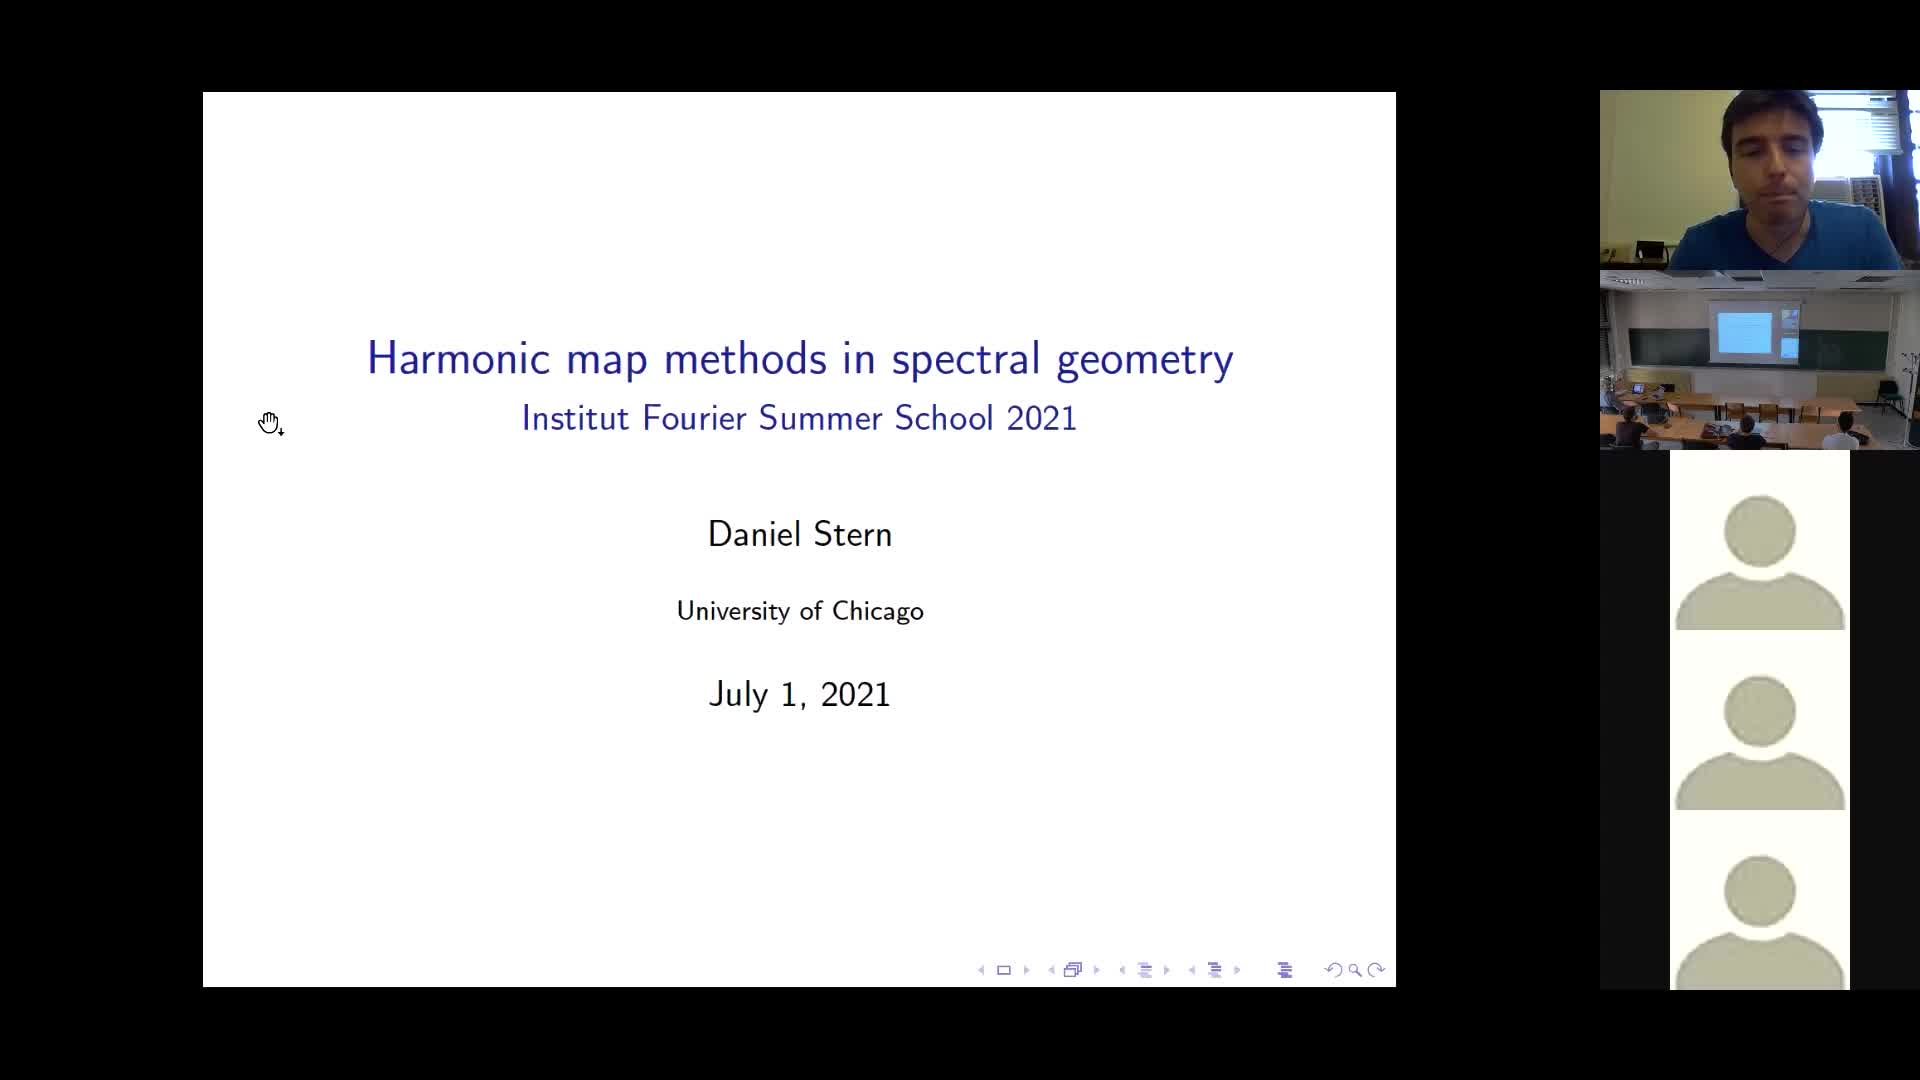 D. Stern - Harmonic map methods in spectral geometry